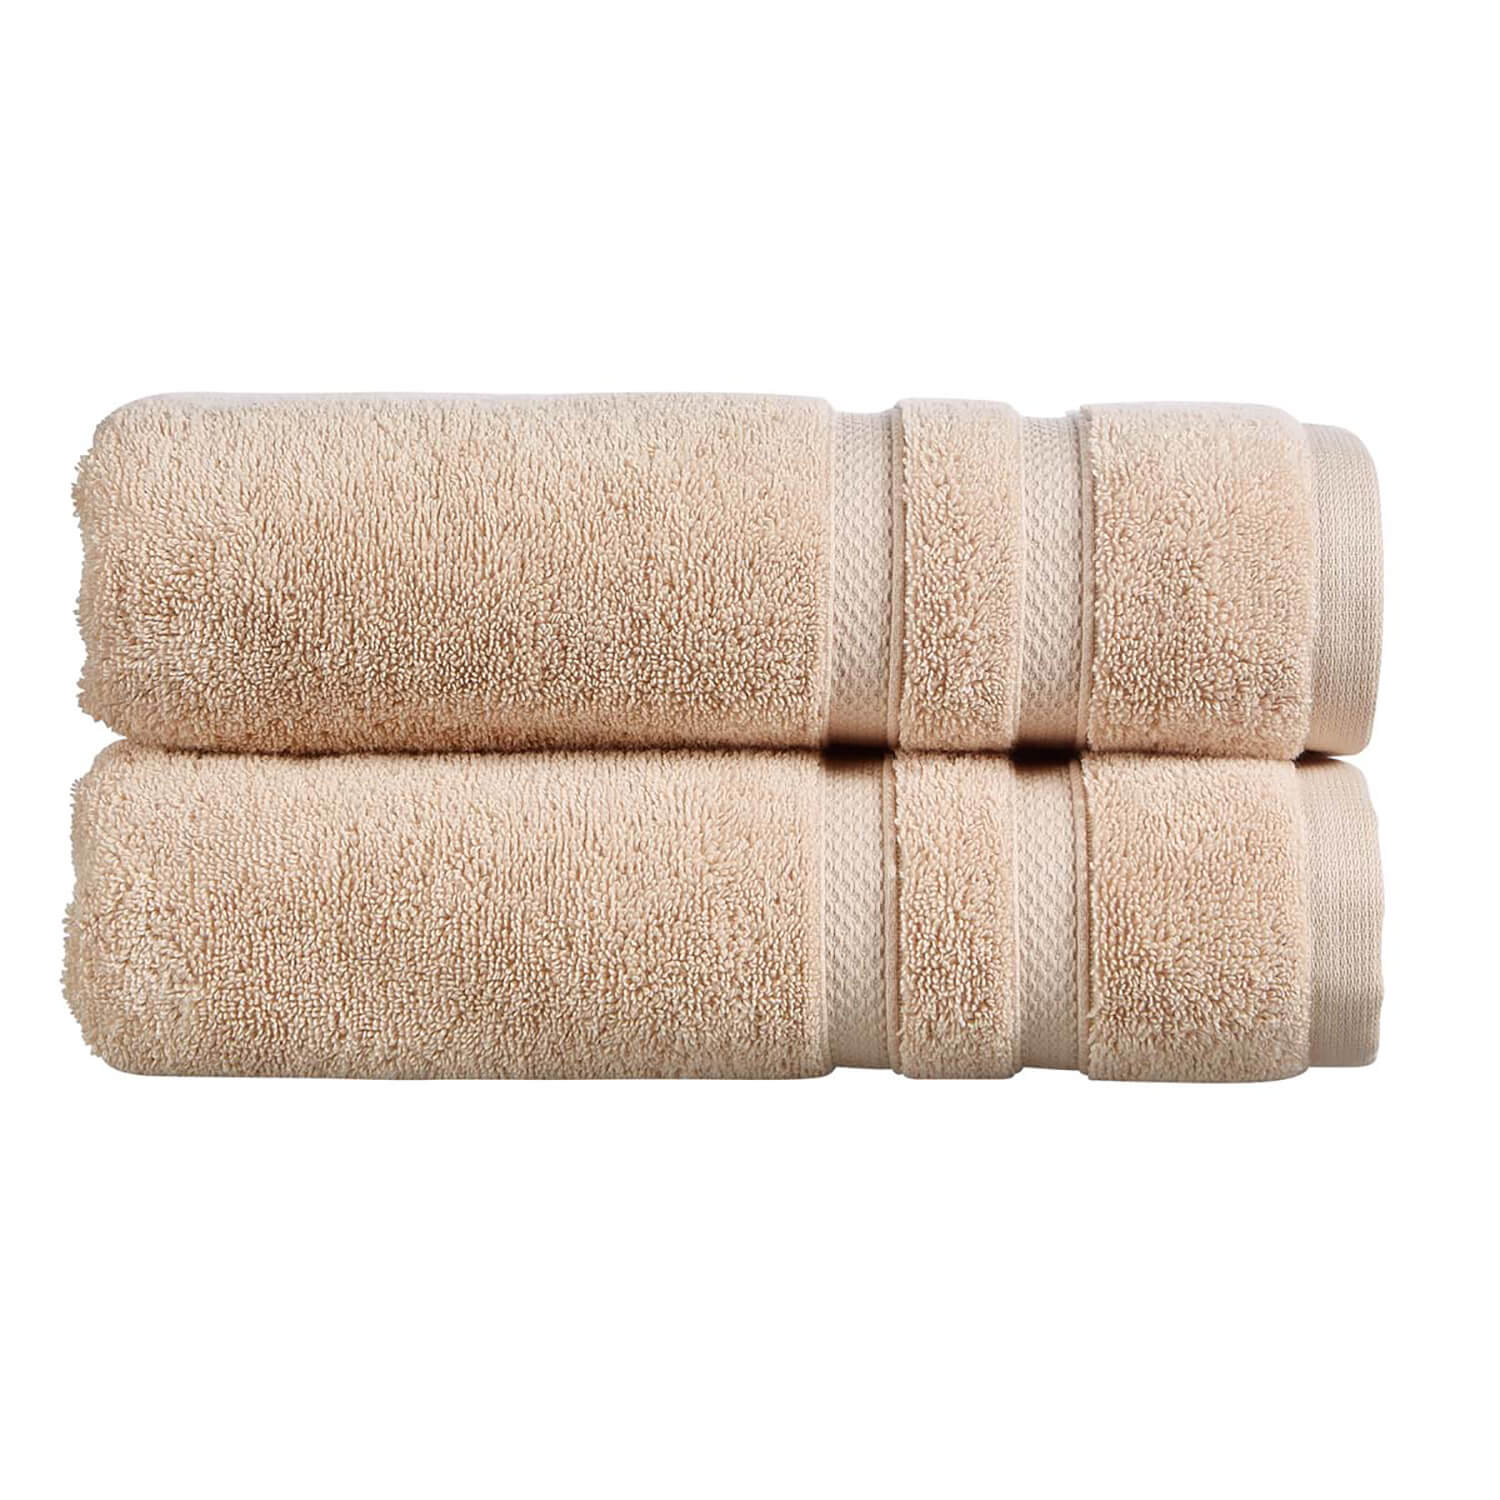 Christy Chroma Bath Towel - Drift Wood 1 Shaws Department Stores